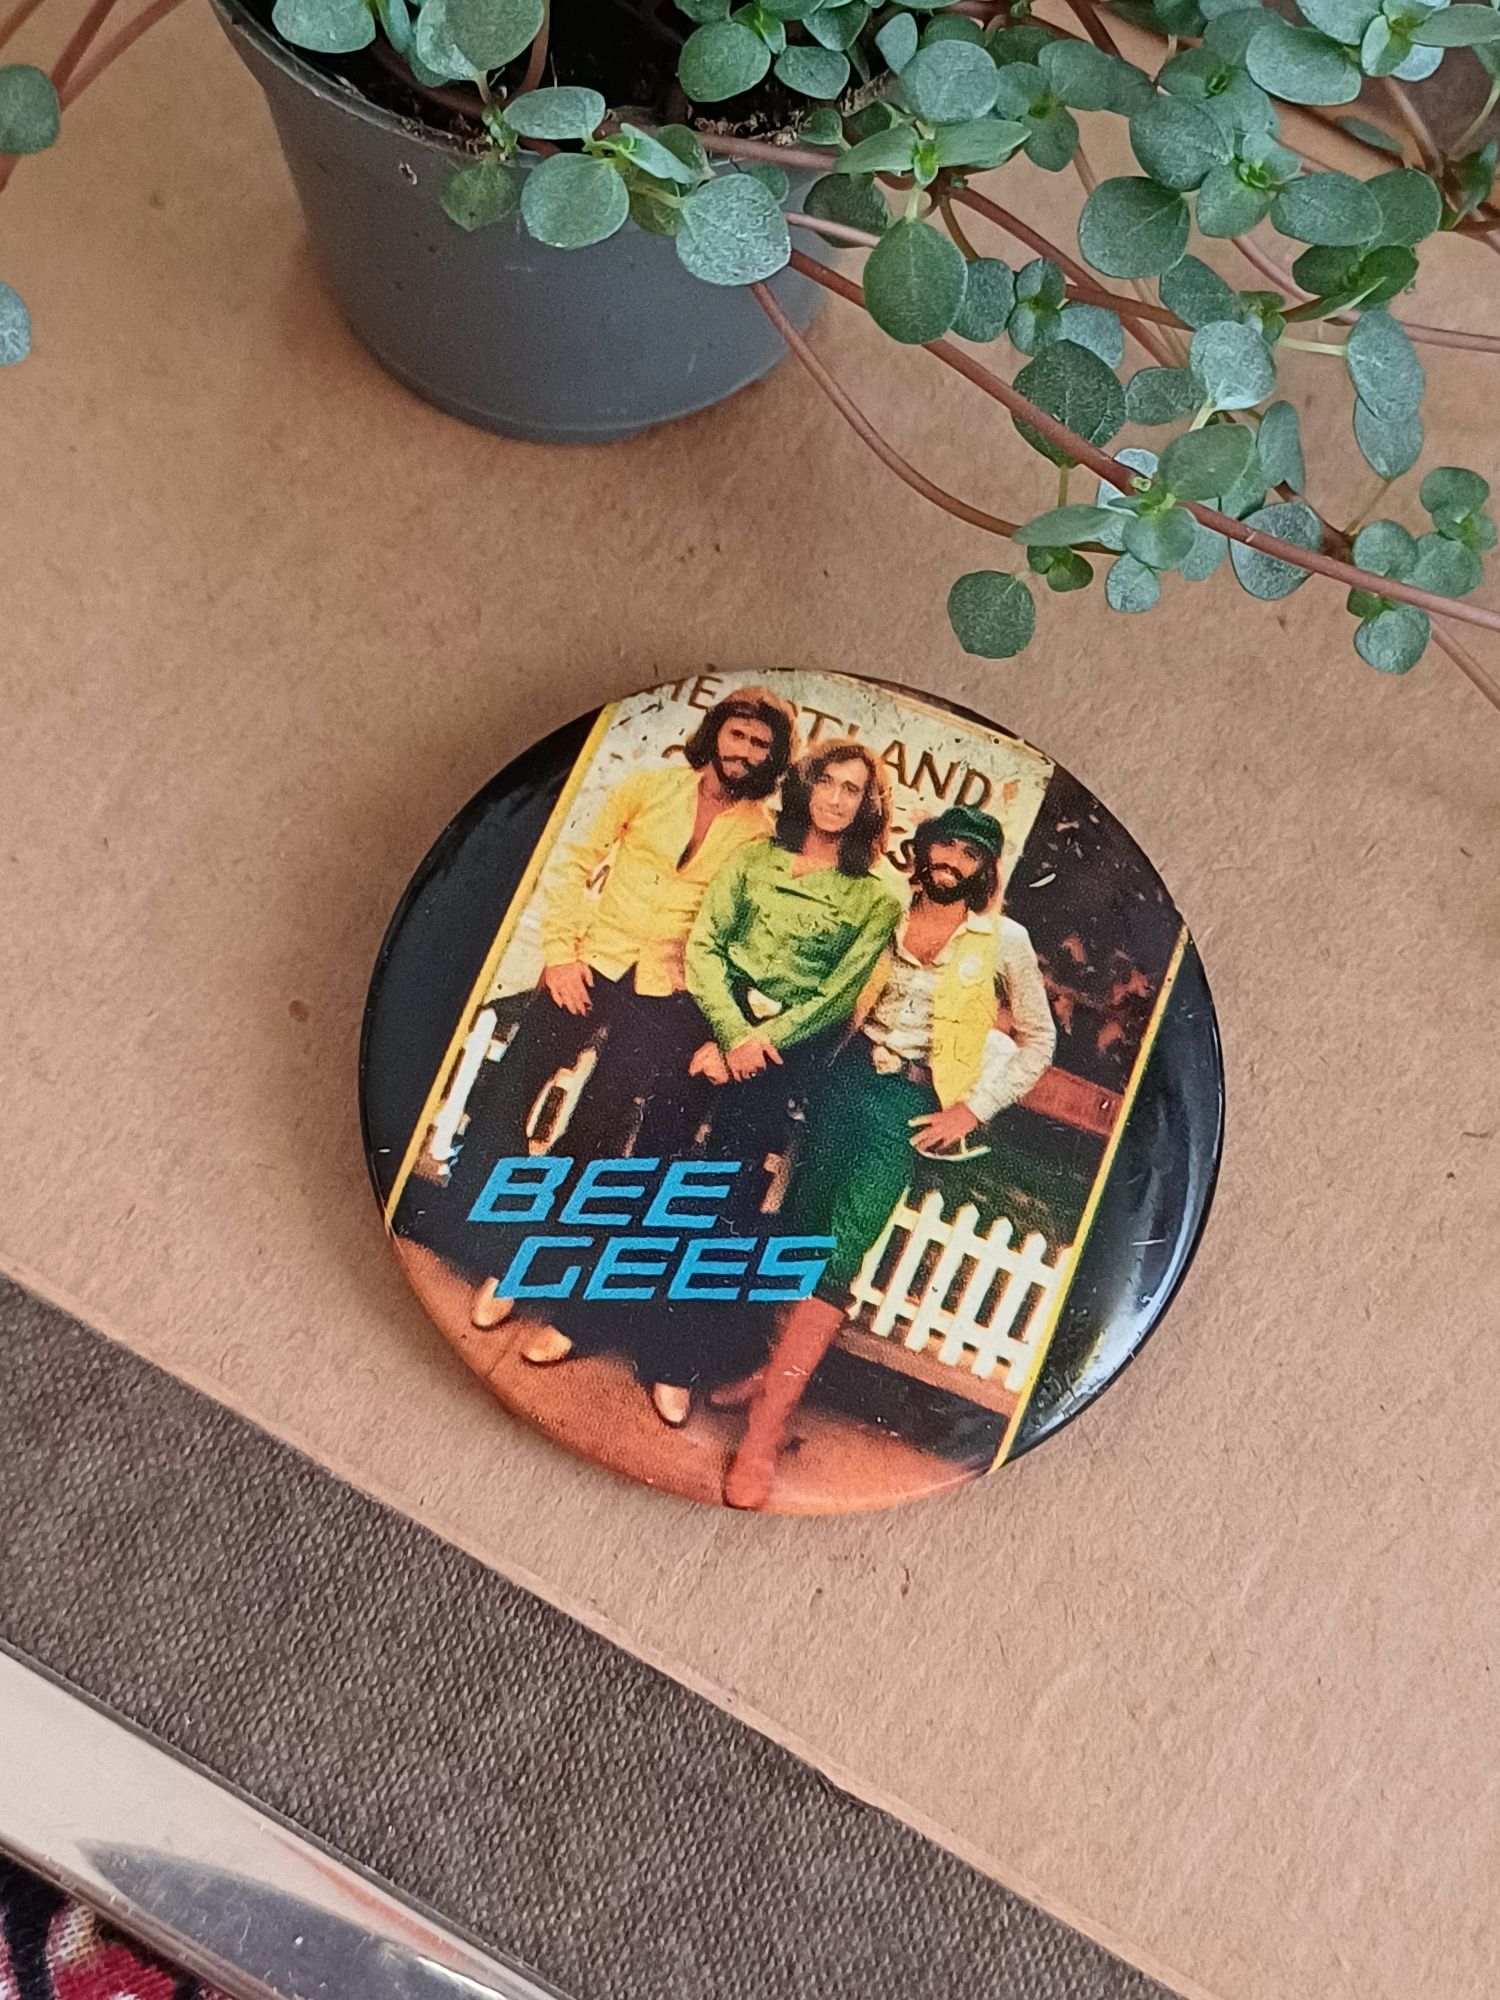 Bee Gees beegees przypinka broszka retro vintage stara kolekcjonersks